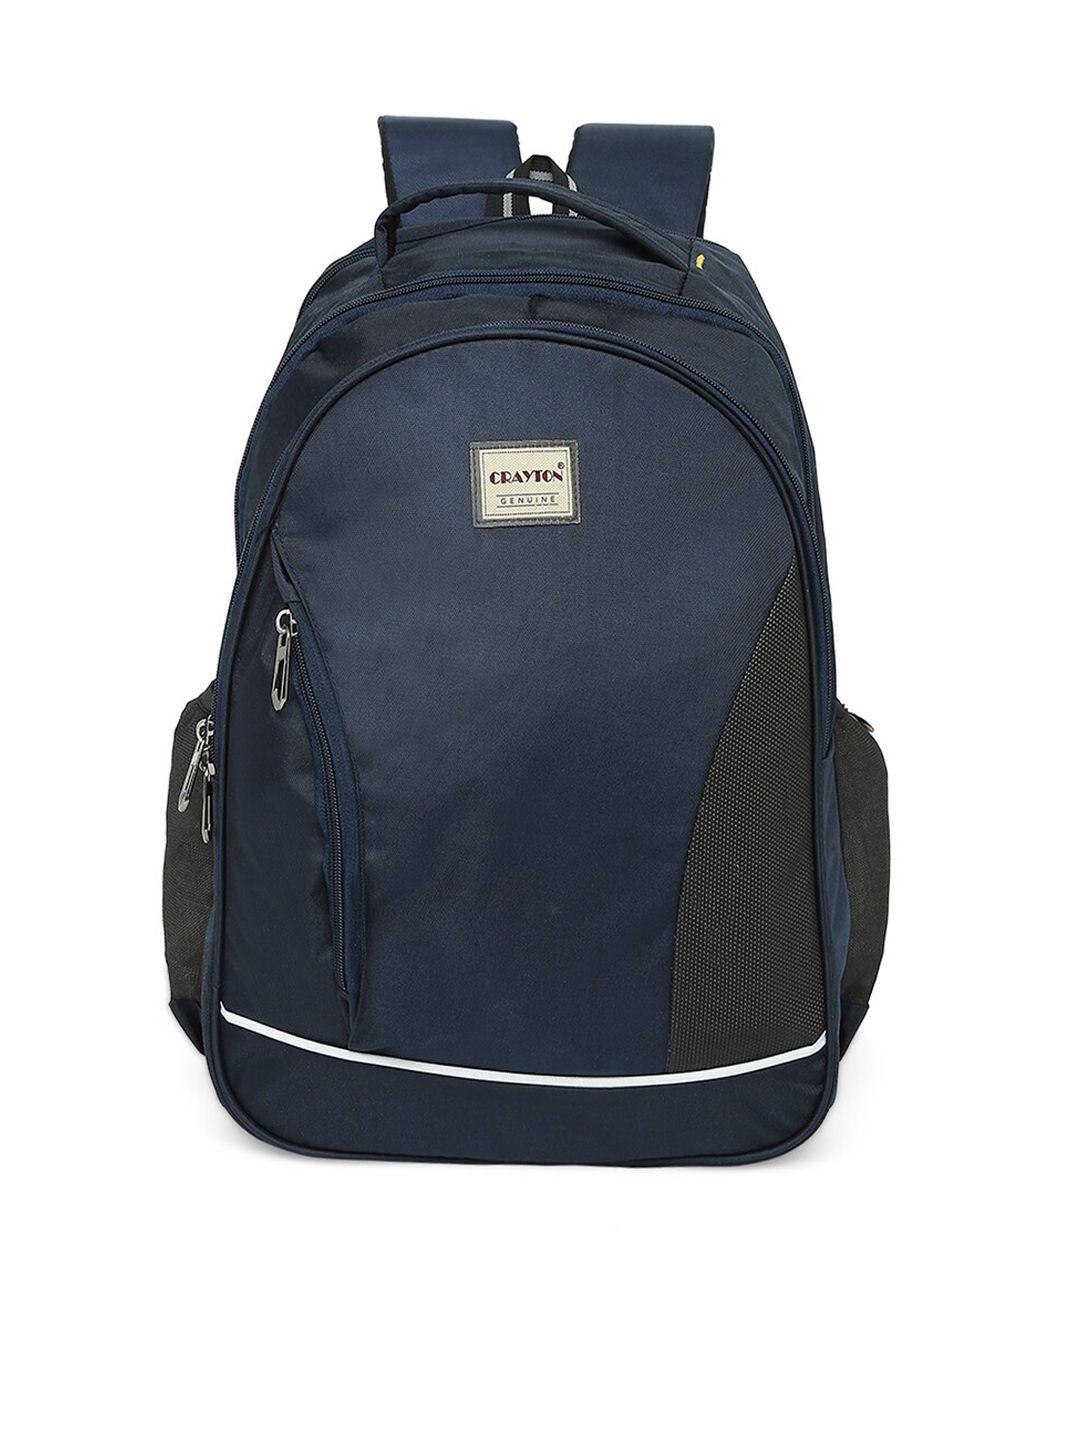 craytonunisex ergonomic upto 15.6 inch backpack with compression straps